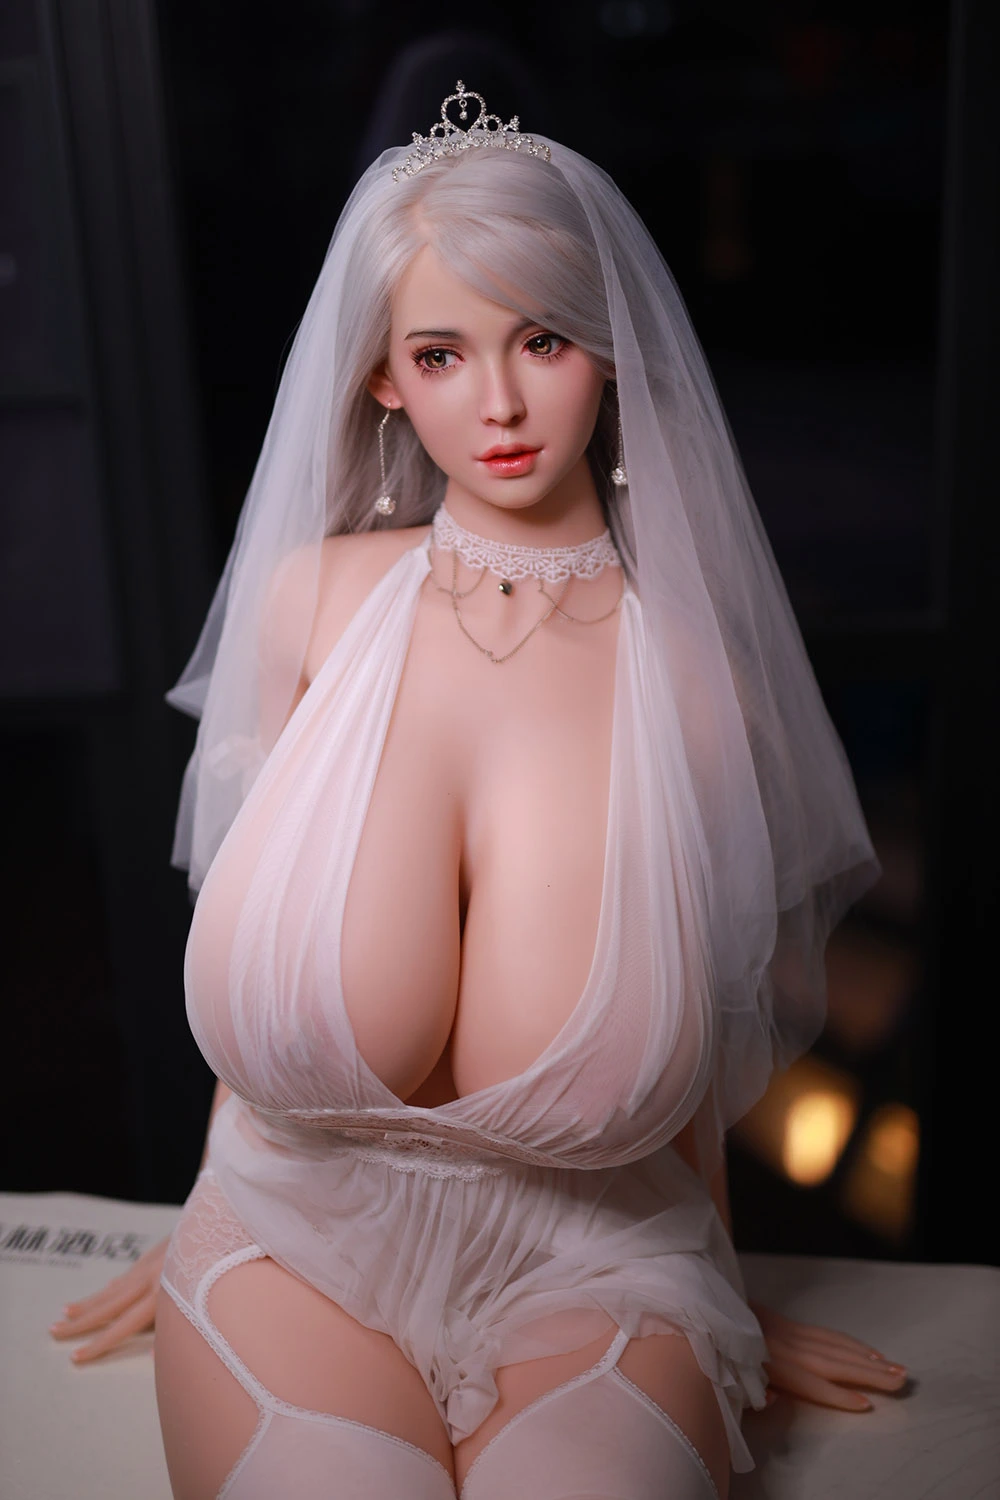 170cm Amative Chubby Miss Sex Doll Xi Nan